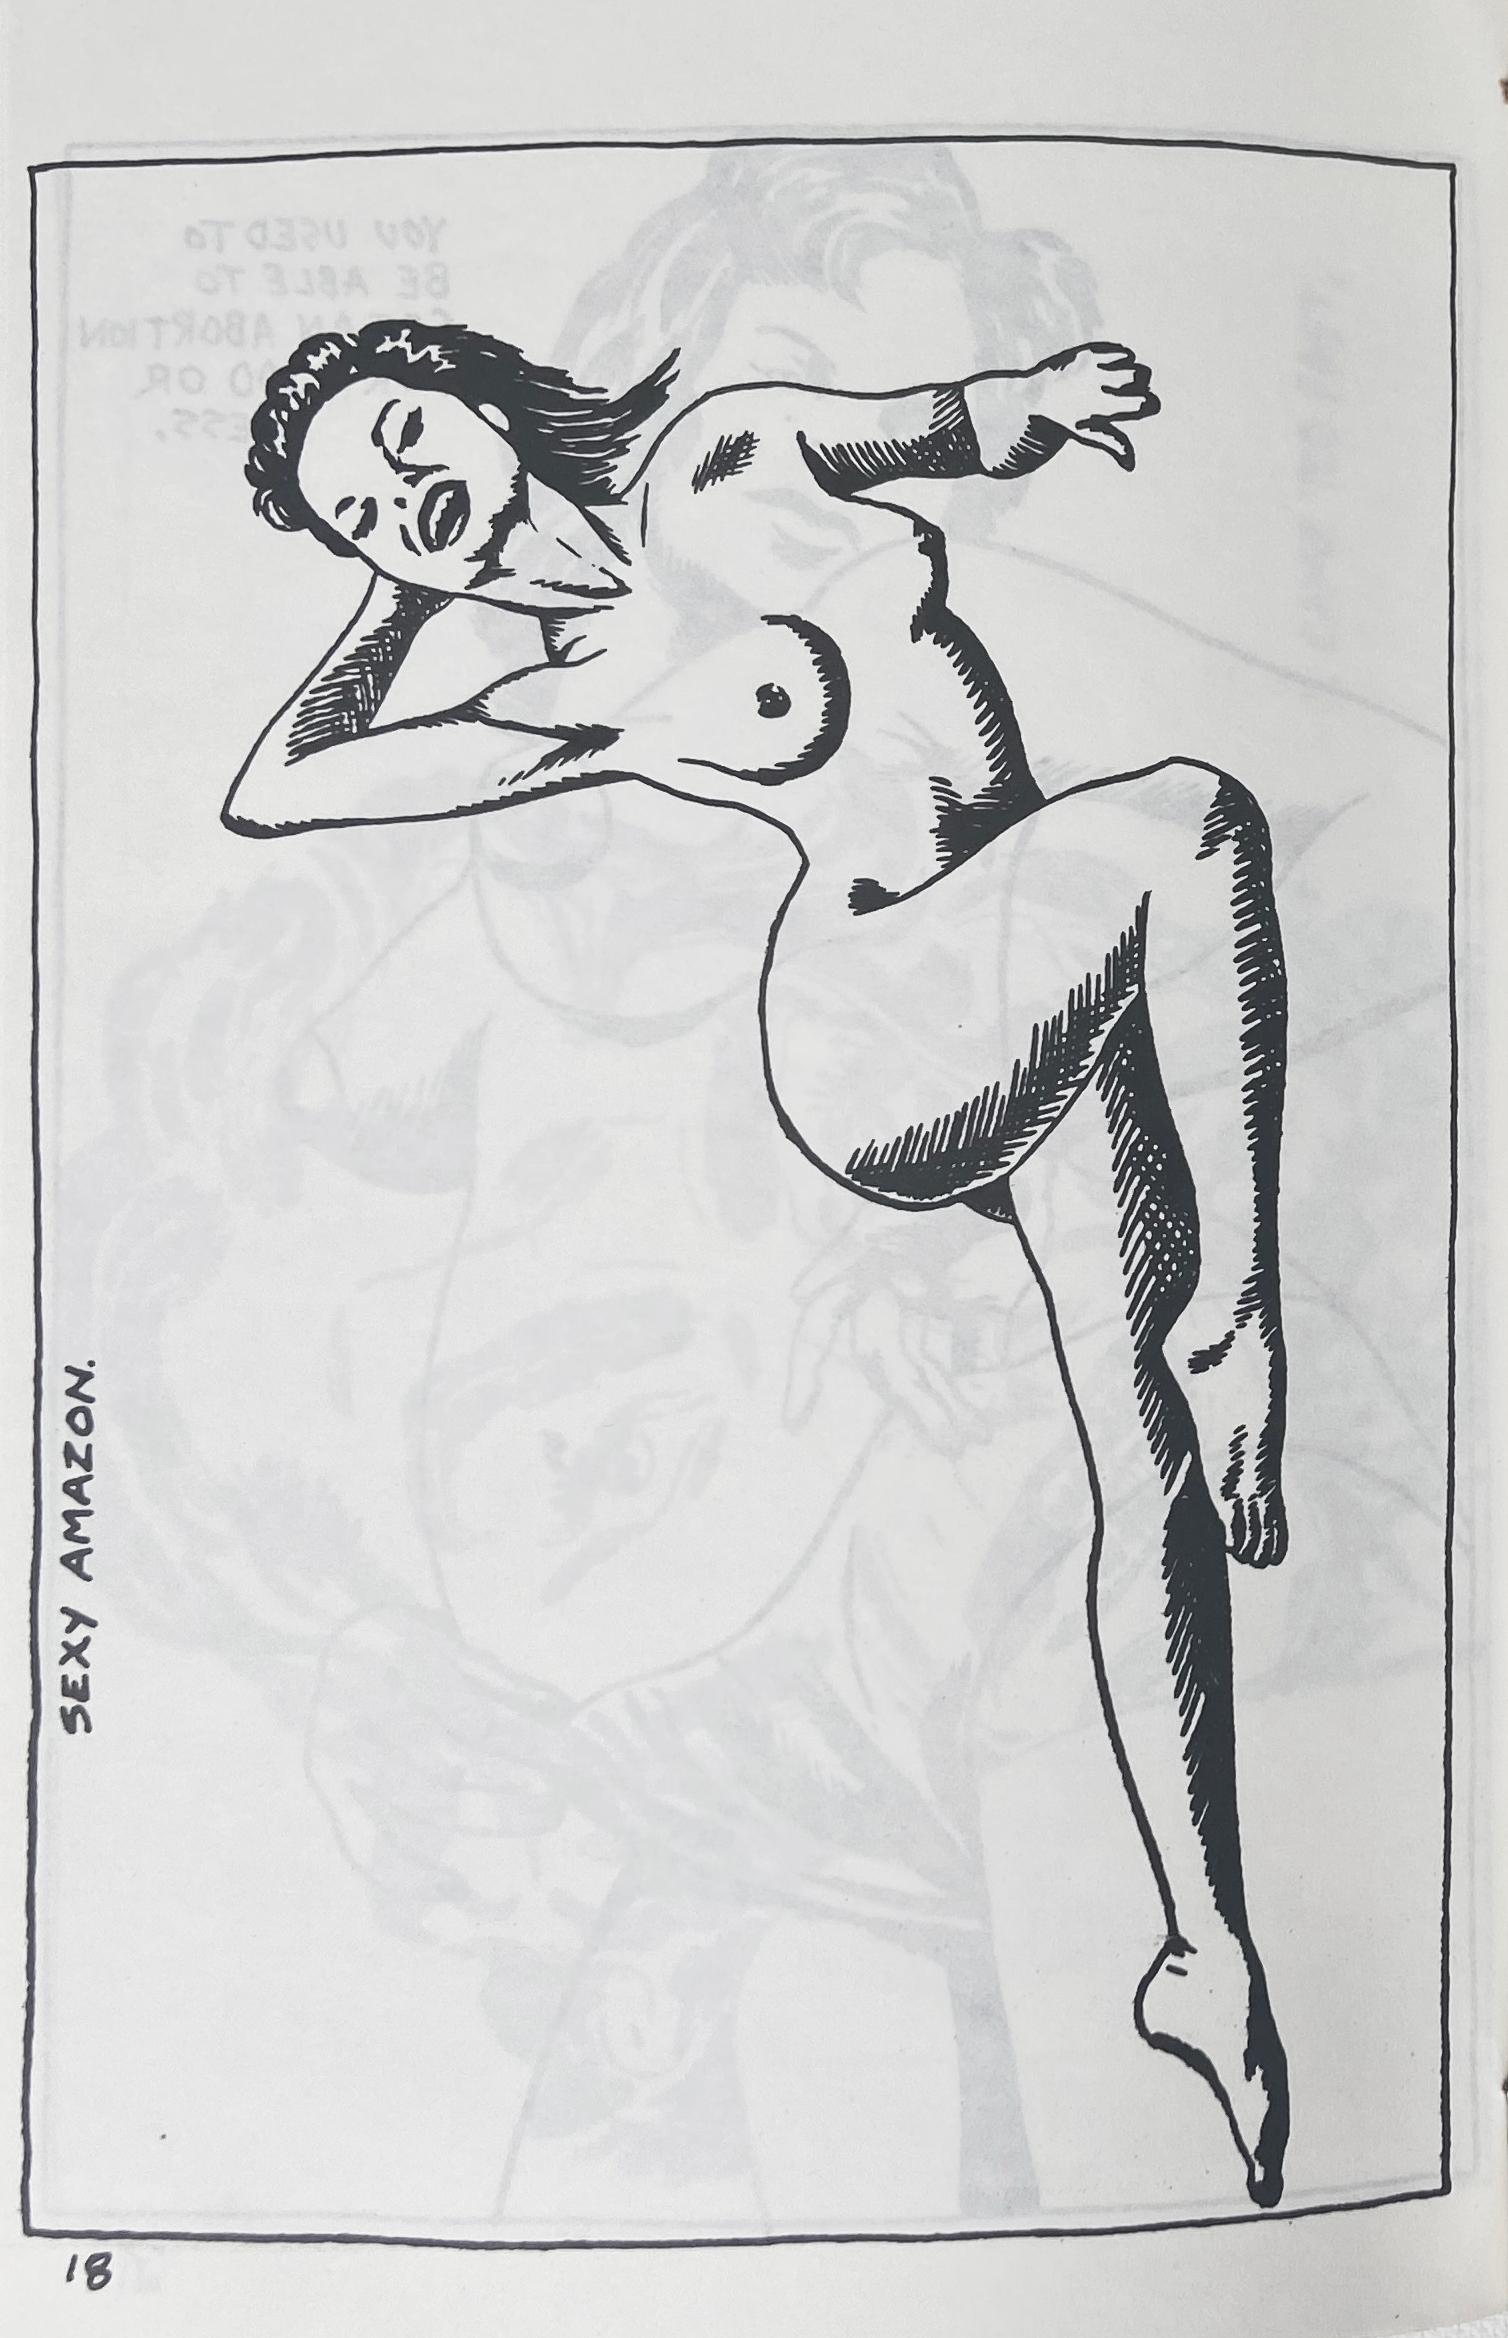 Raymond Pettibon artist book 1984 (early Raymond Pettibon) 1